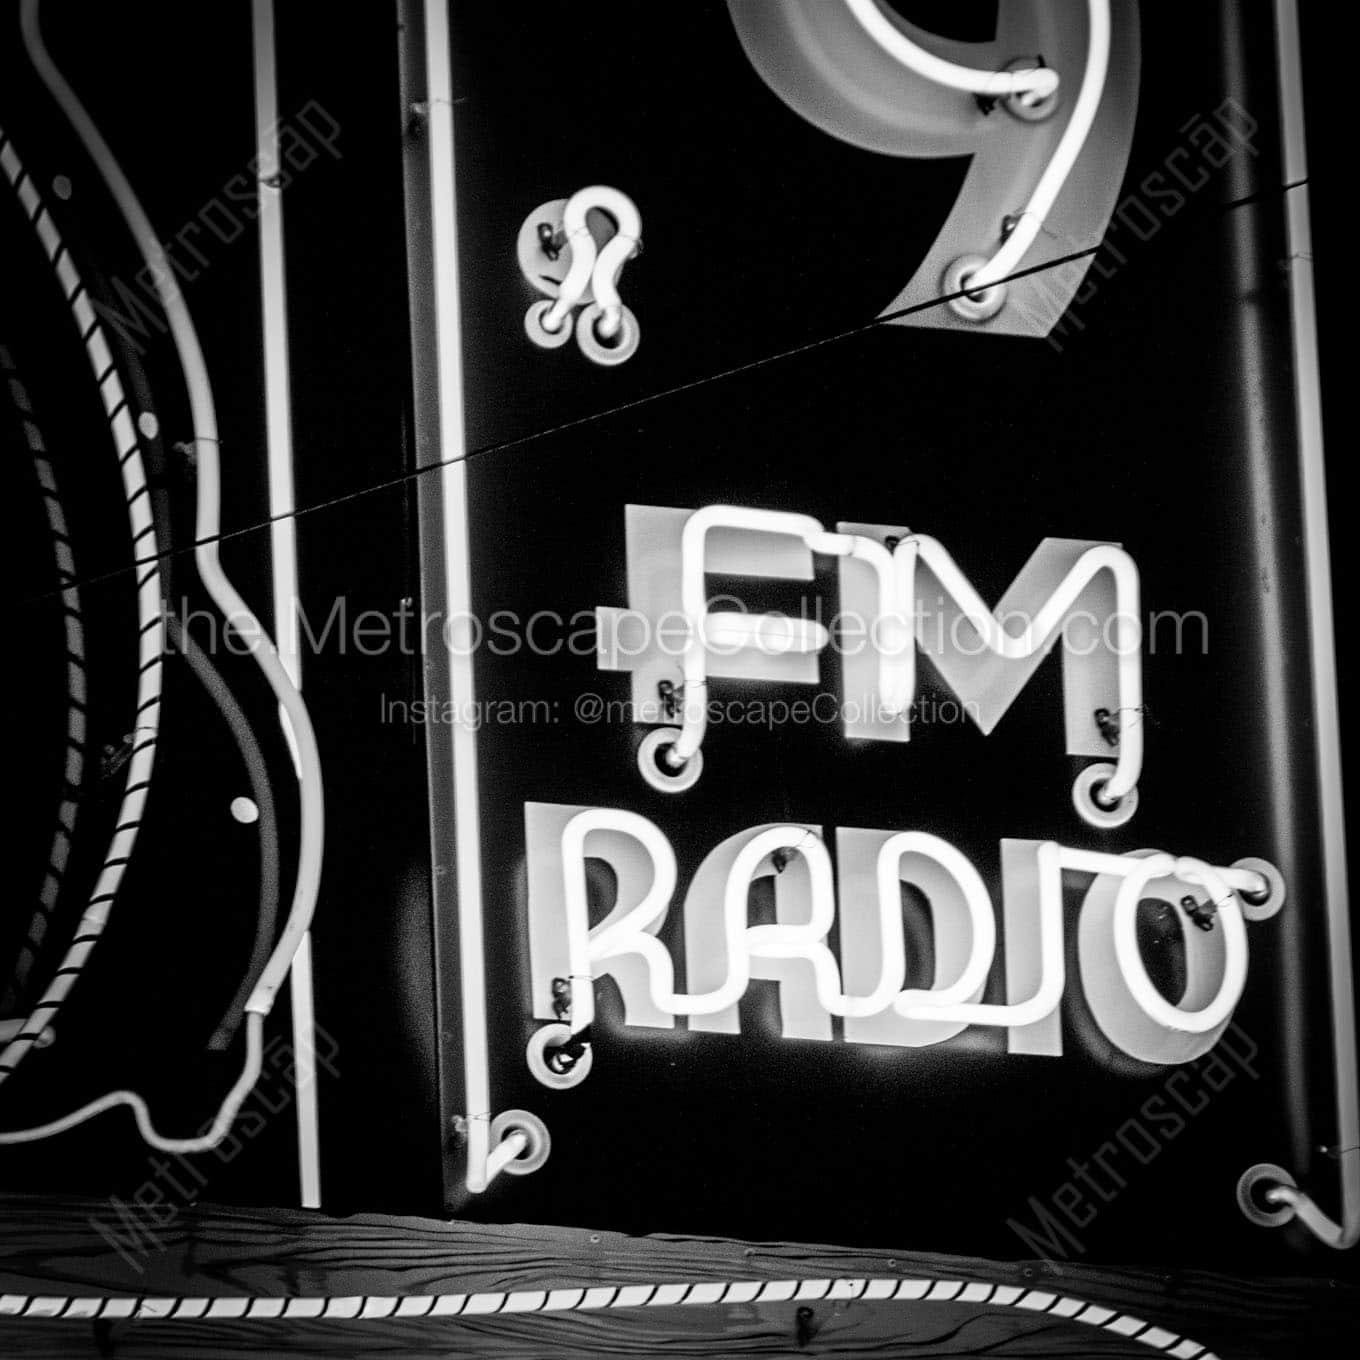 92 9 fm radio sign Black & White Office Art